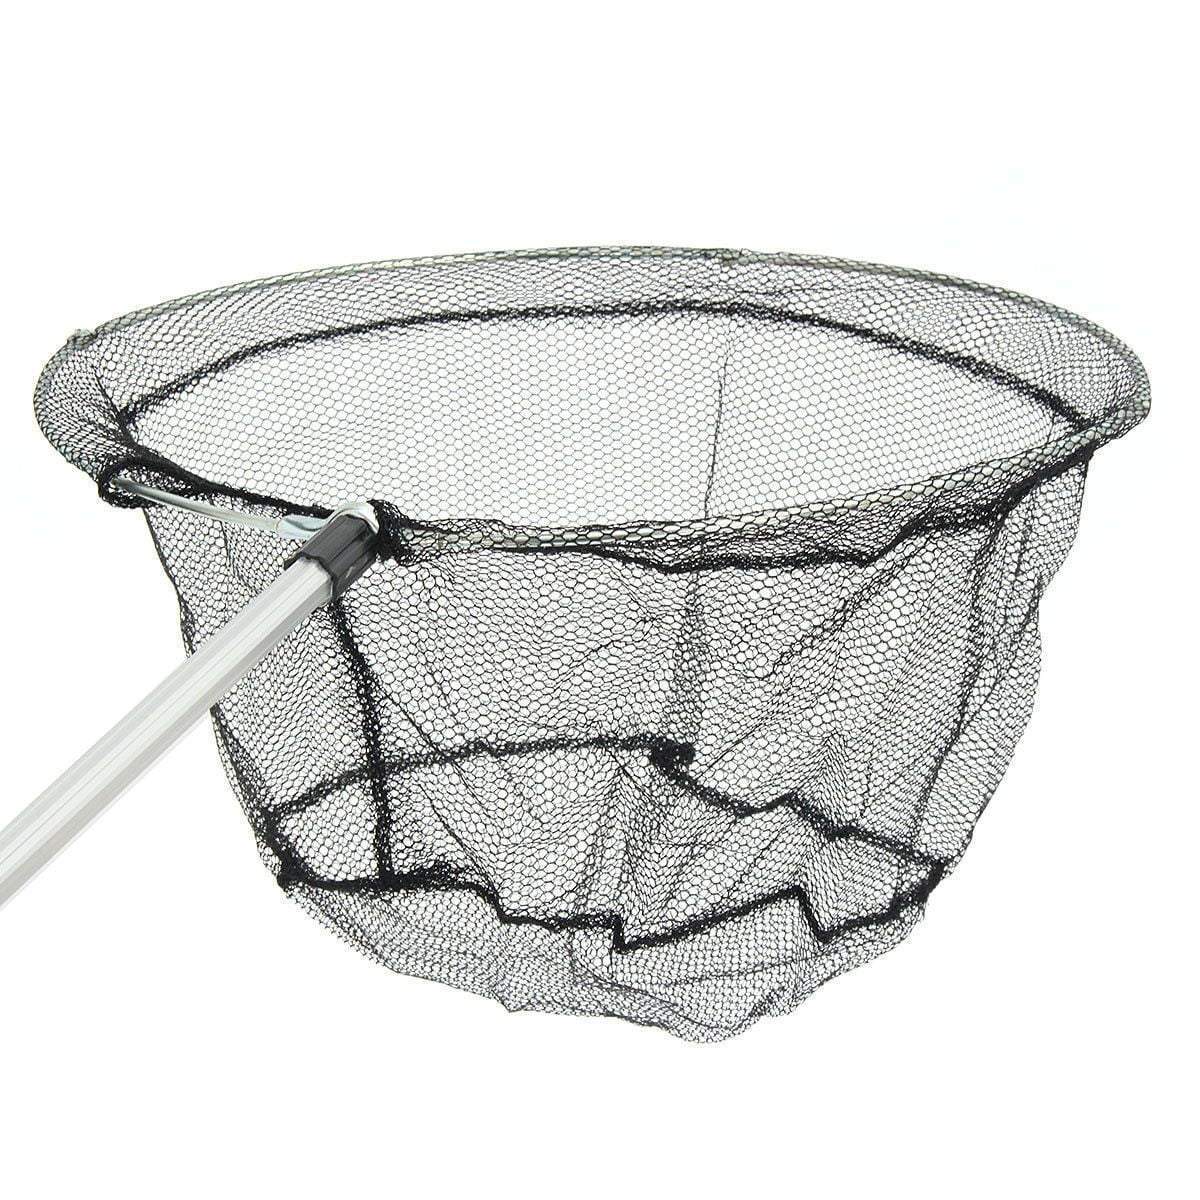 Folding Extending Fishing Net Landing Net Pole Handle 3 Section